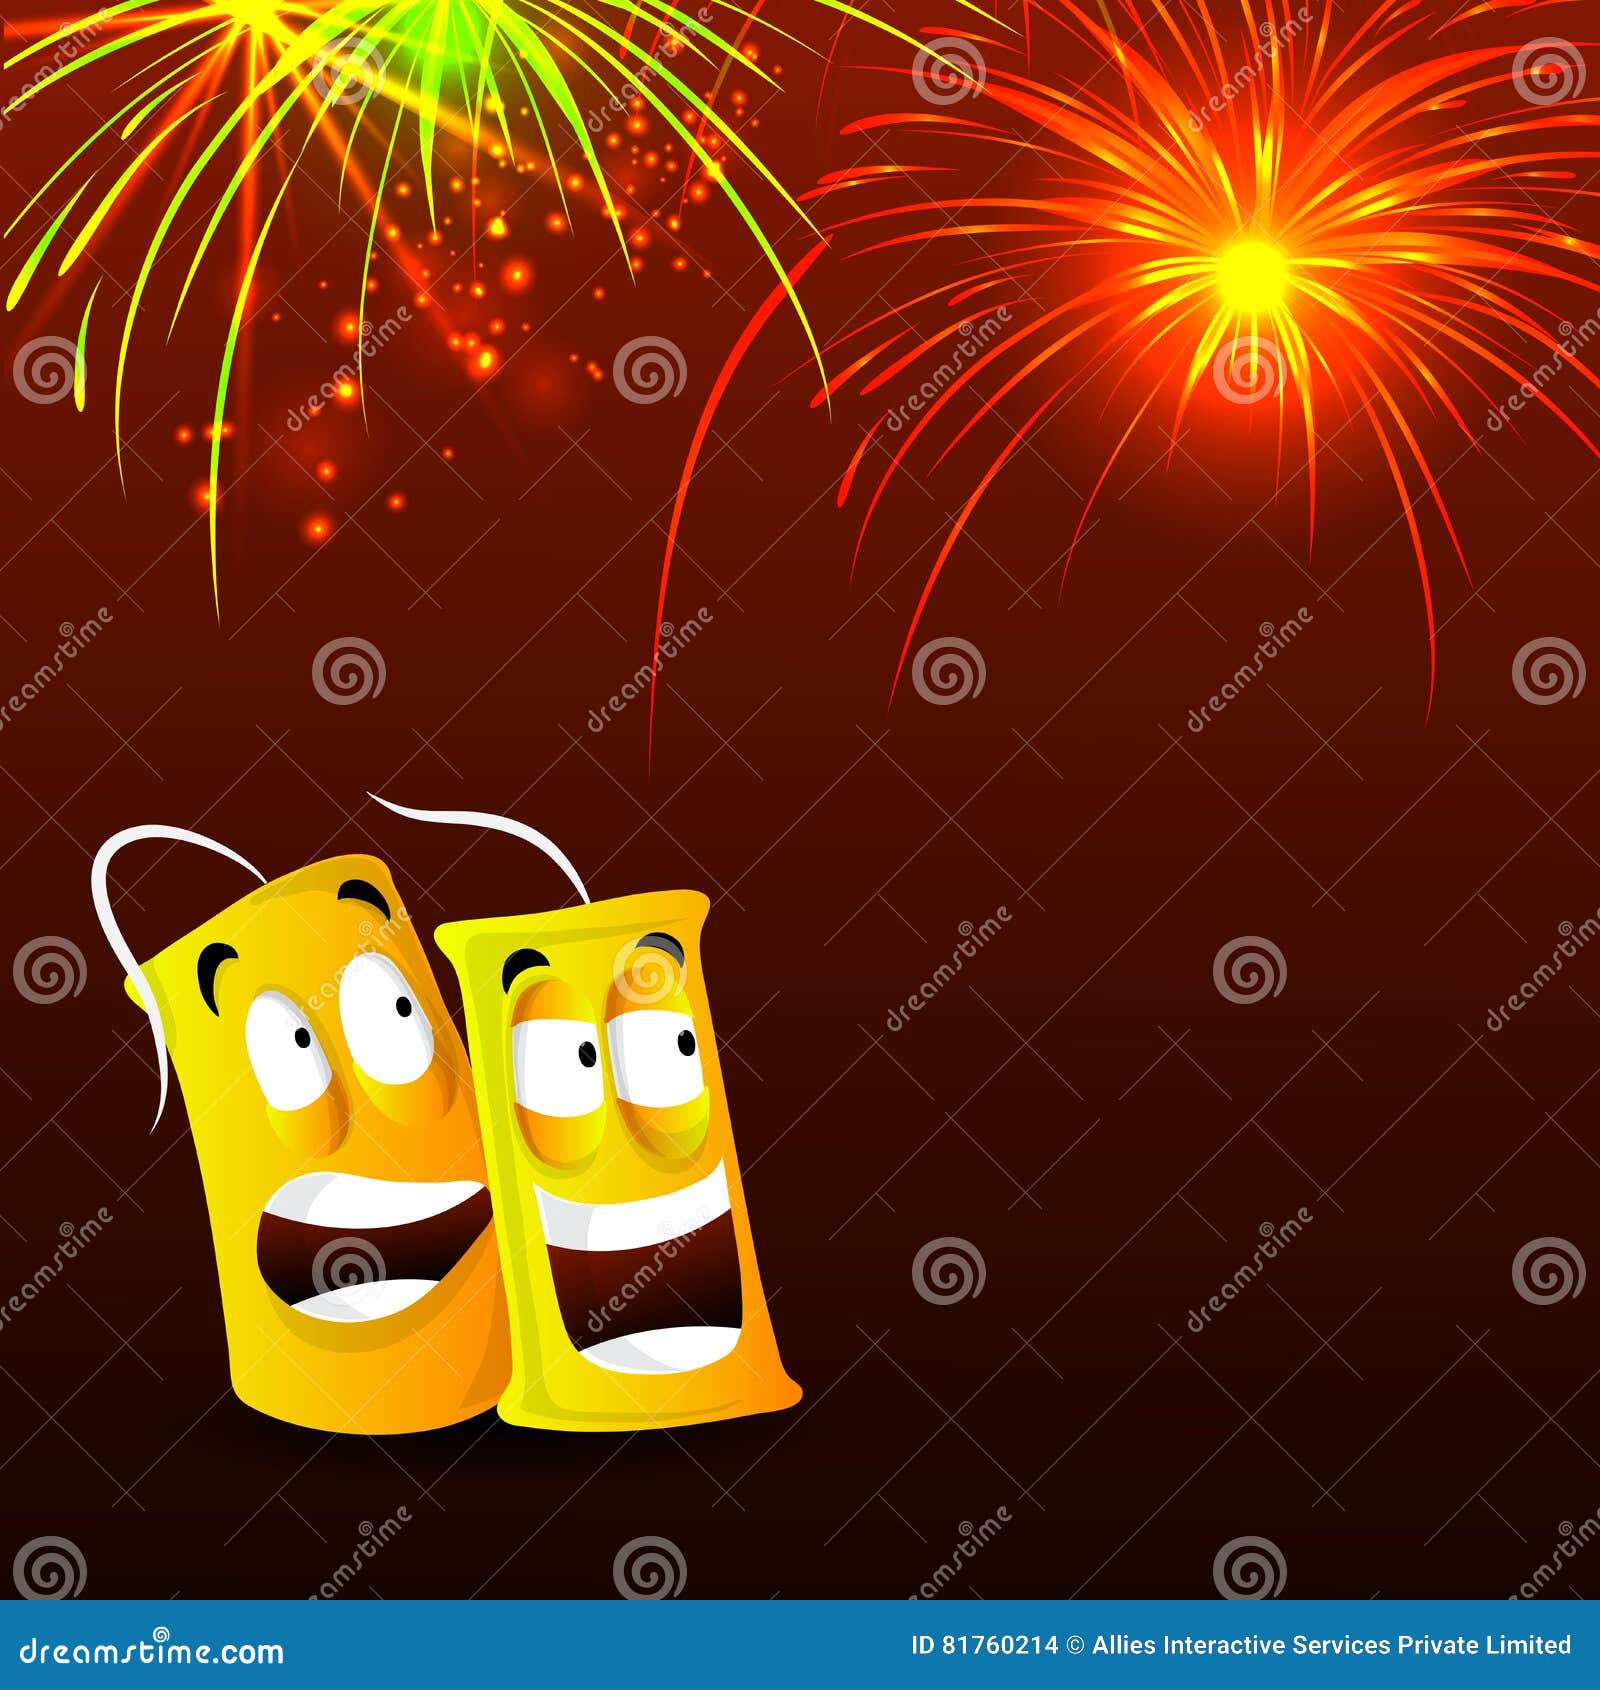 Diwali Celebration Background with Firecrackers. Stock ...